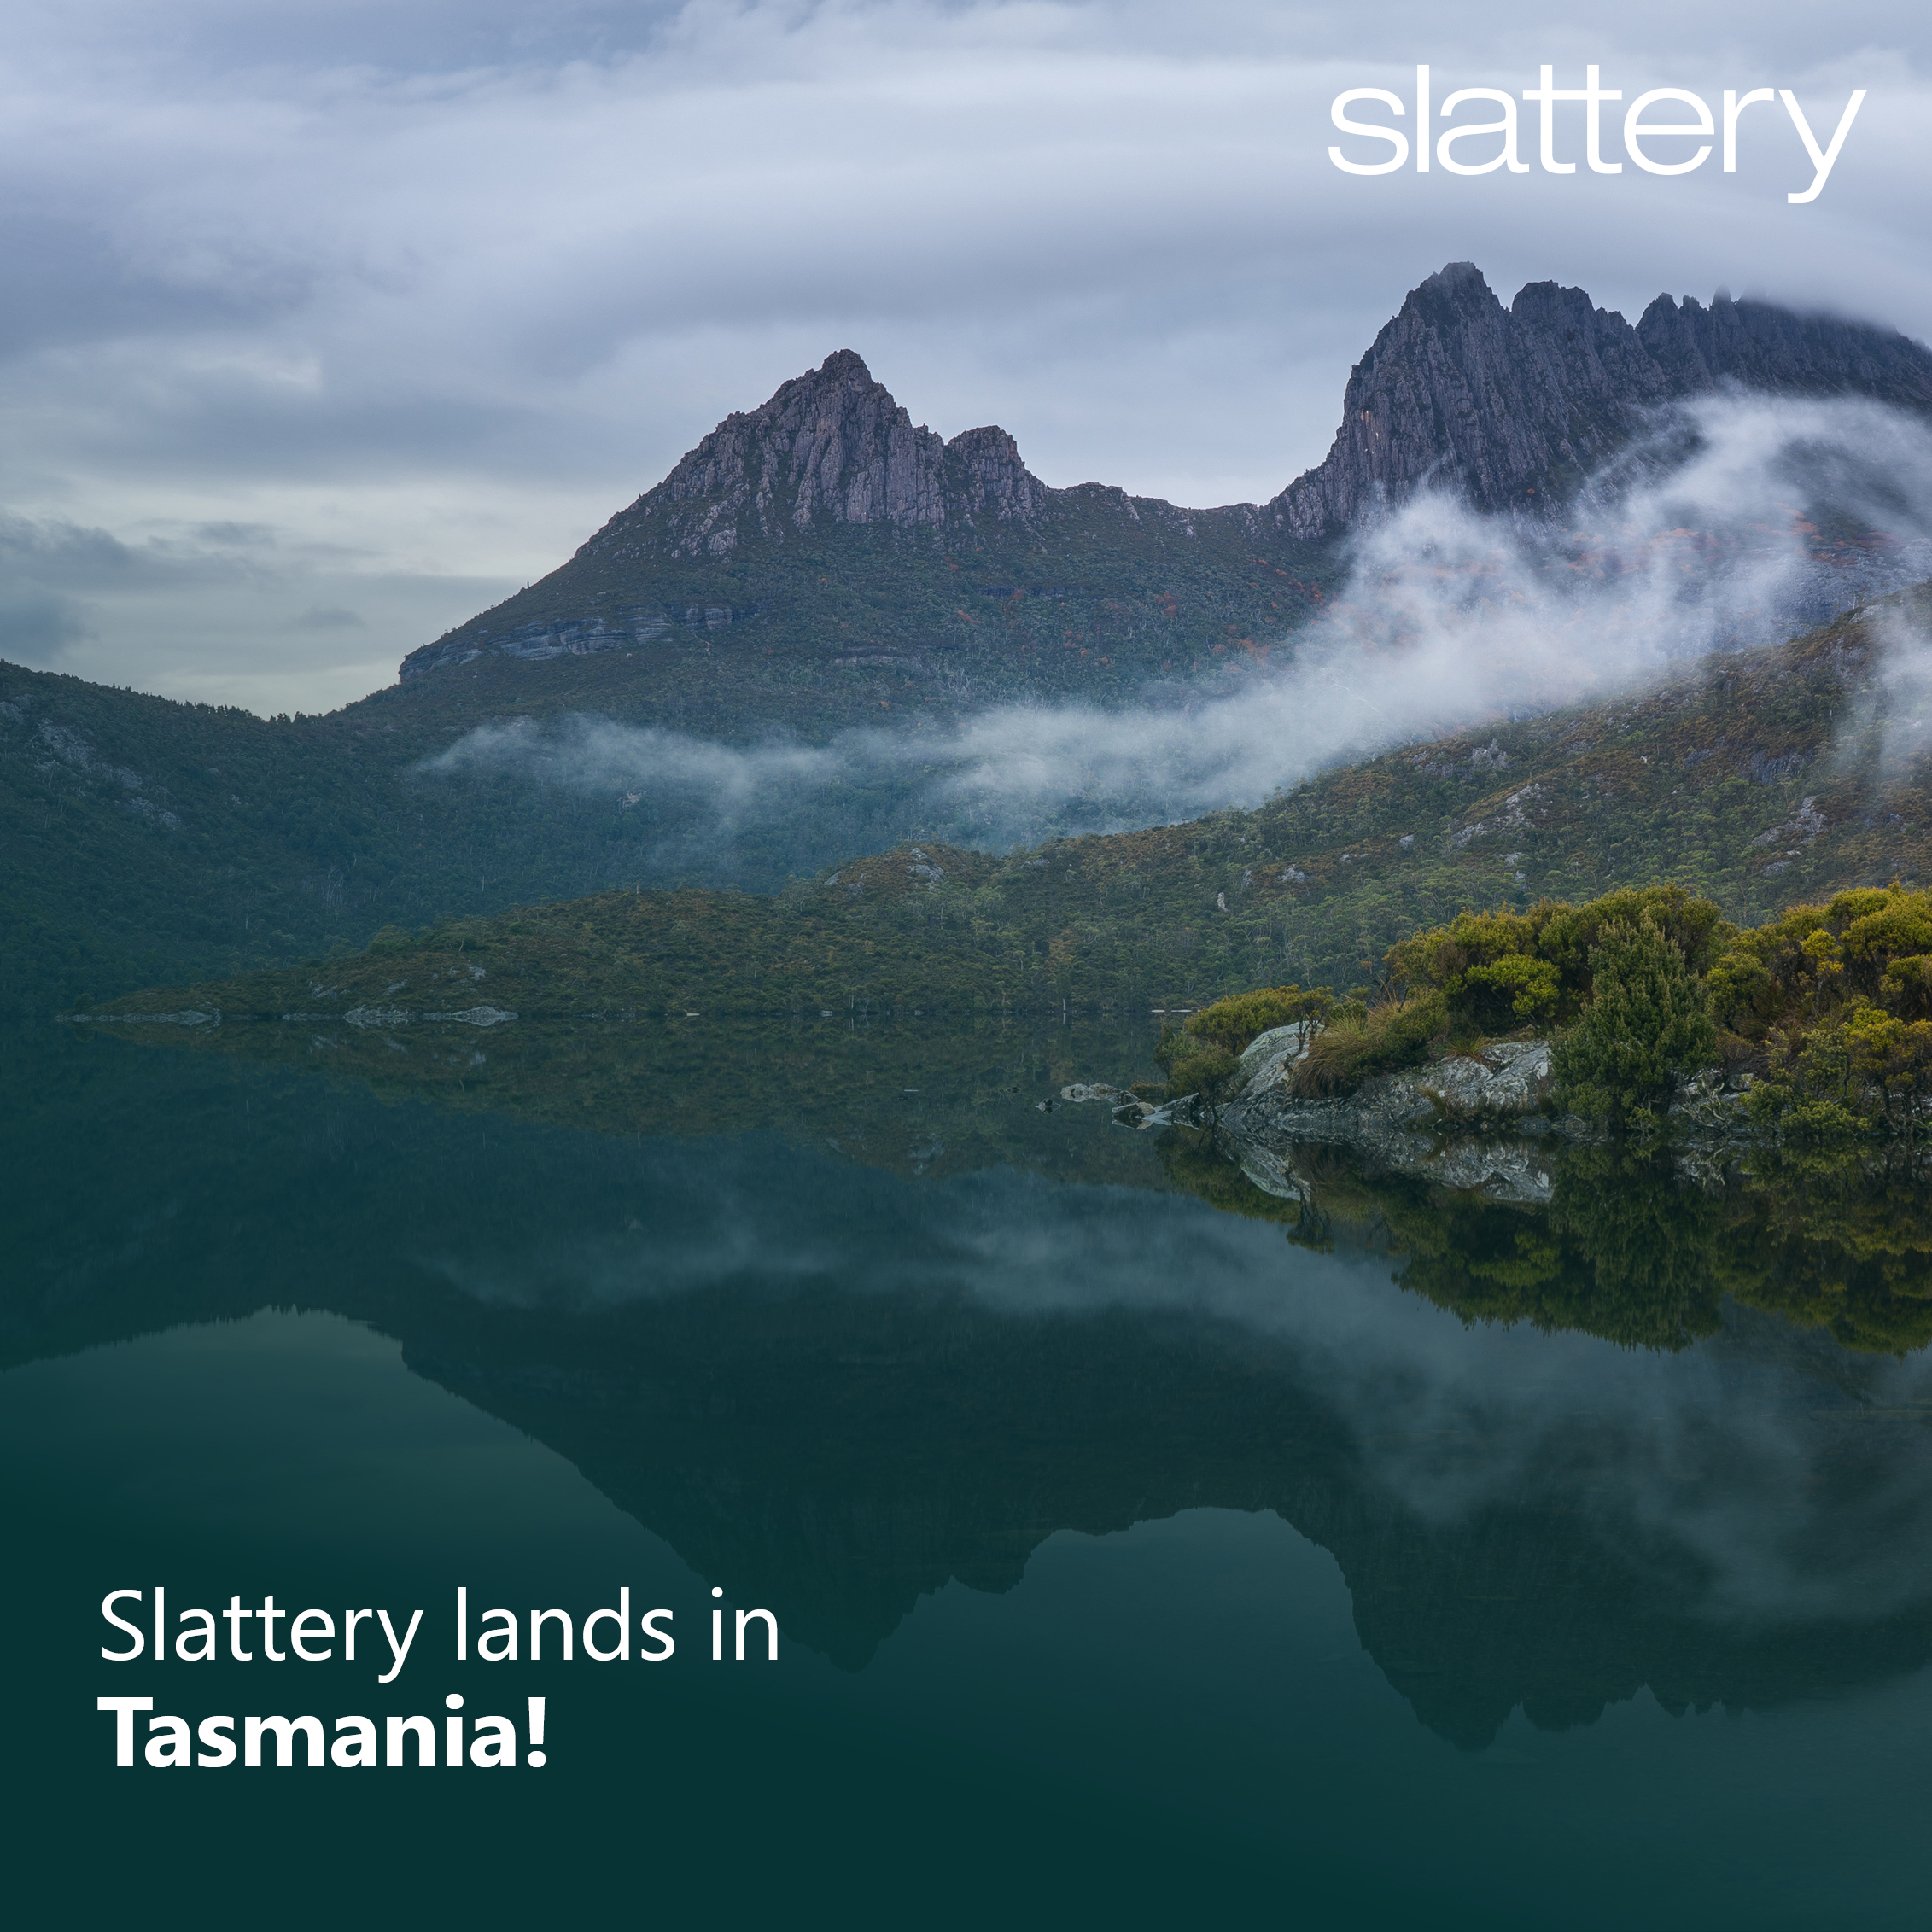 Slattery lands in Tasmania - image of Cradle Mountain